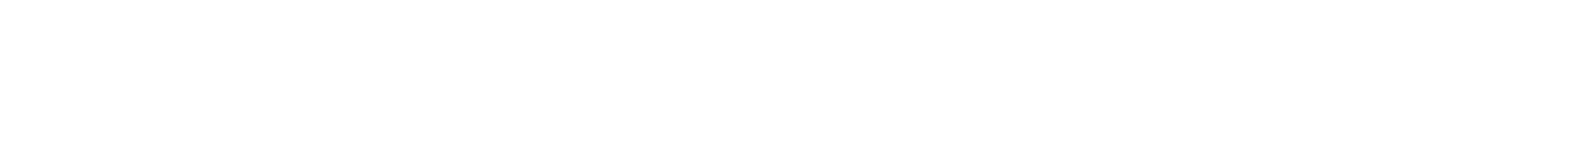 Lanvin Group Logo groß für dunkle Hintergründe (transparentes PNG)